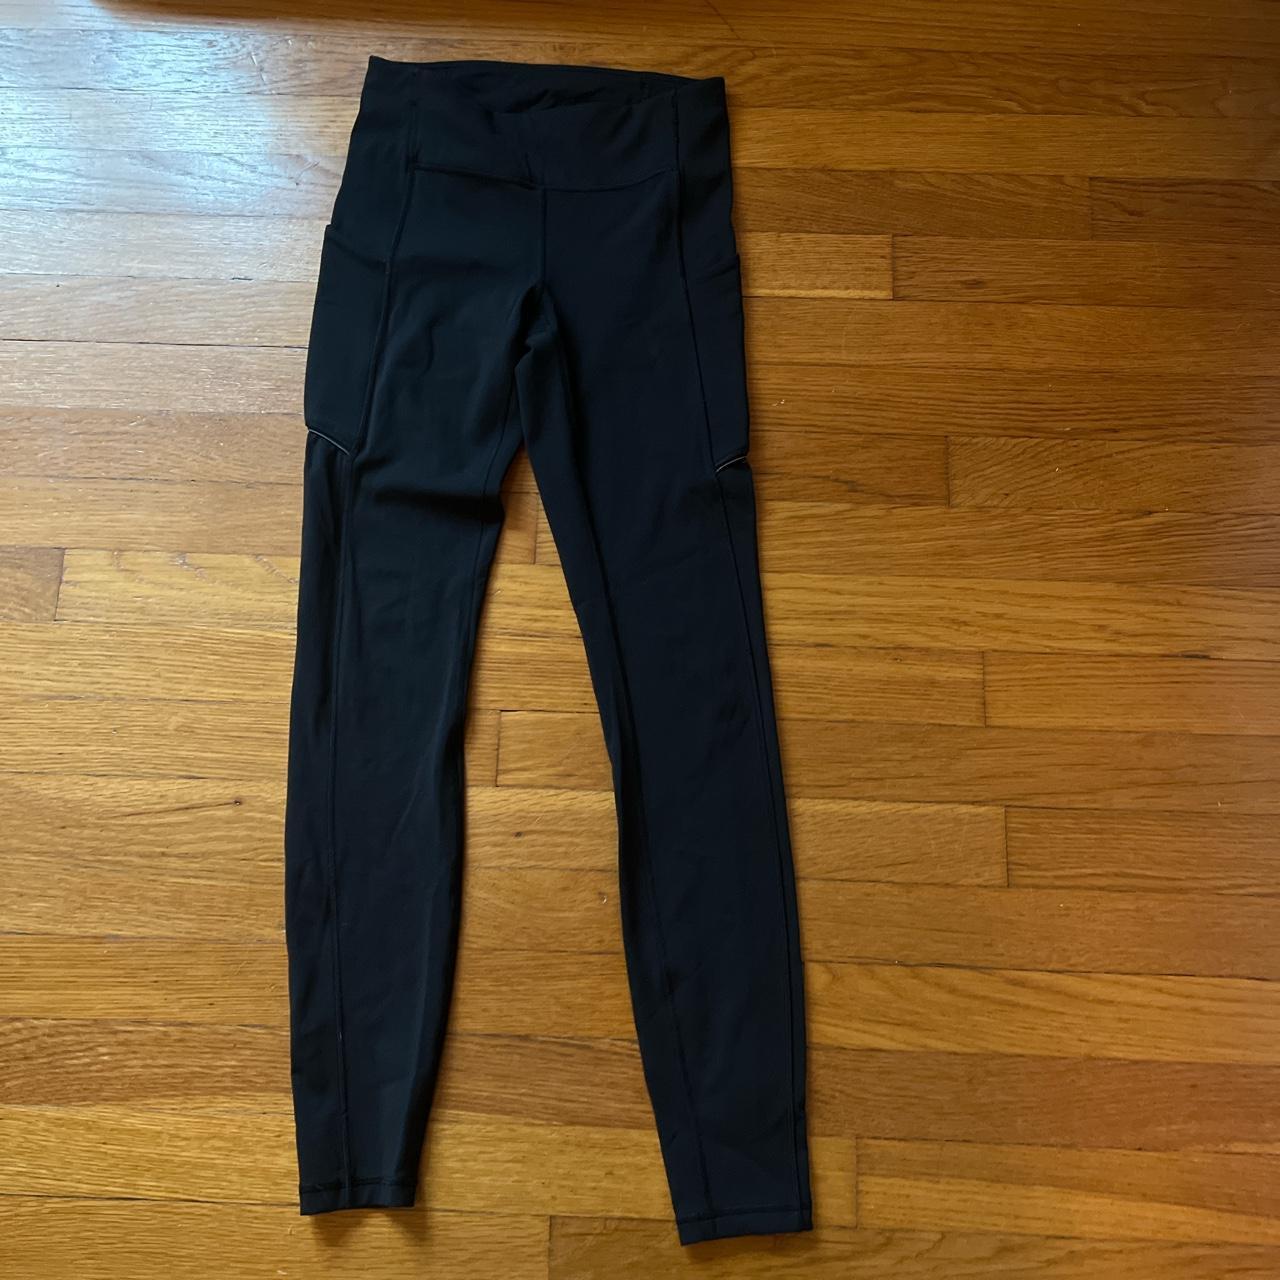 Black Lululemon leggings. , Size 4, Pockets on both